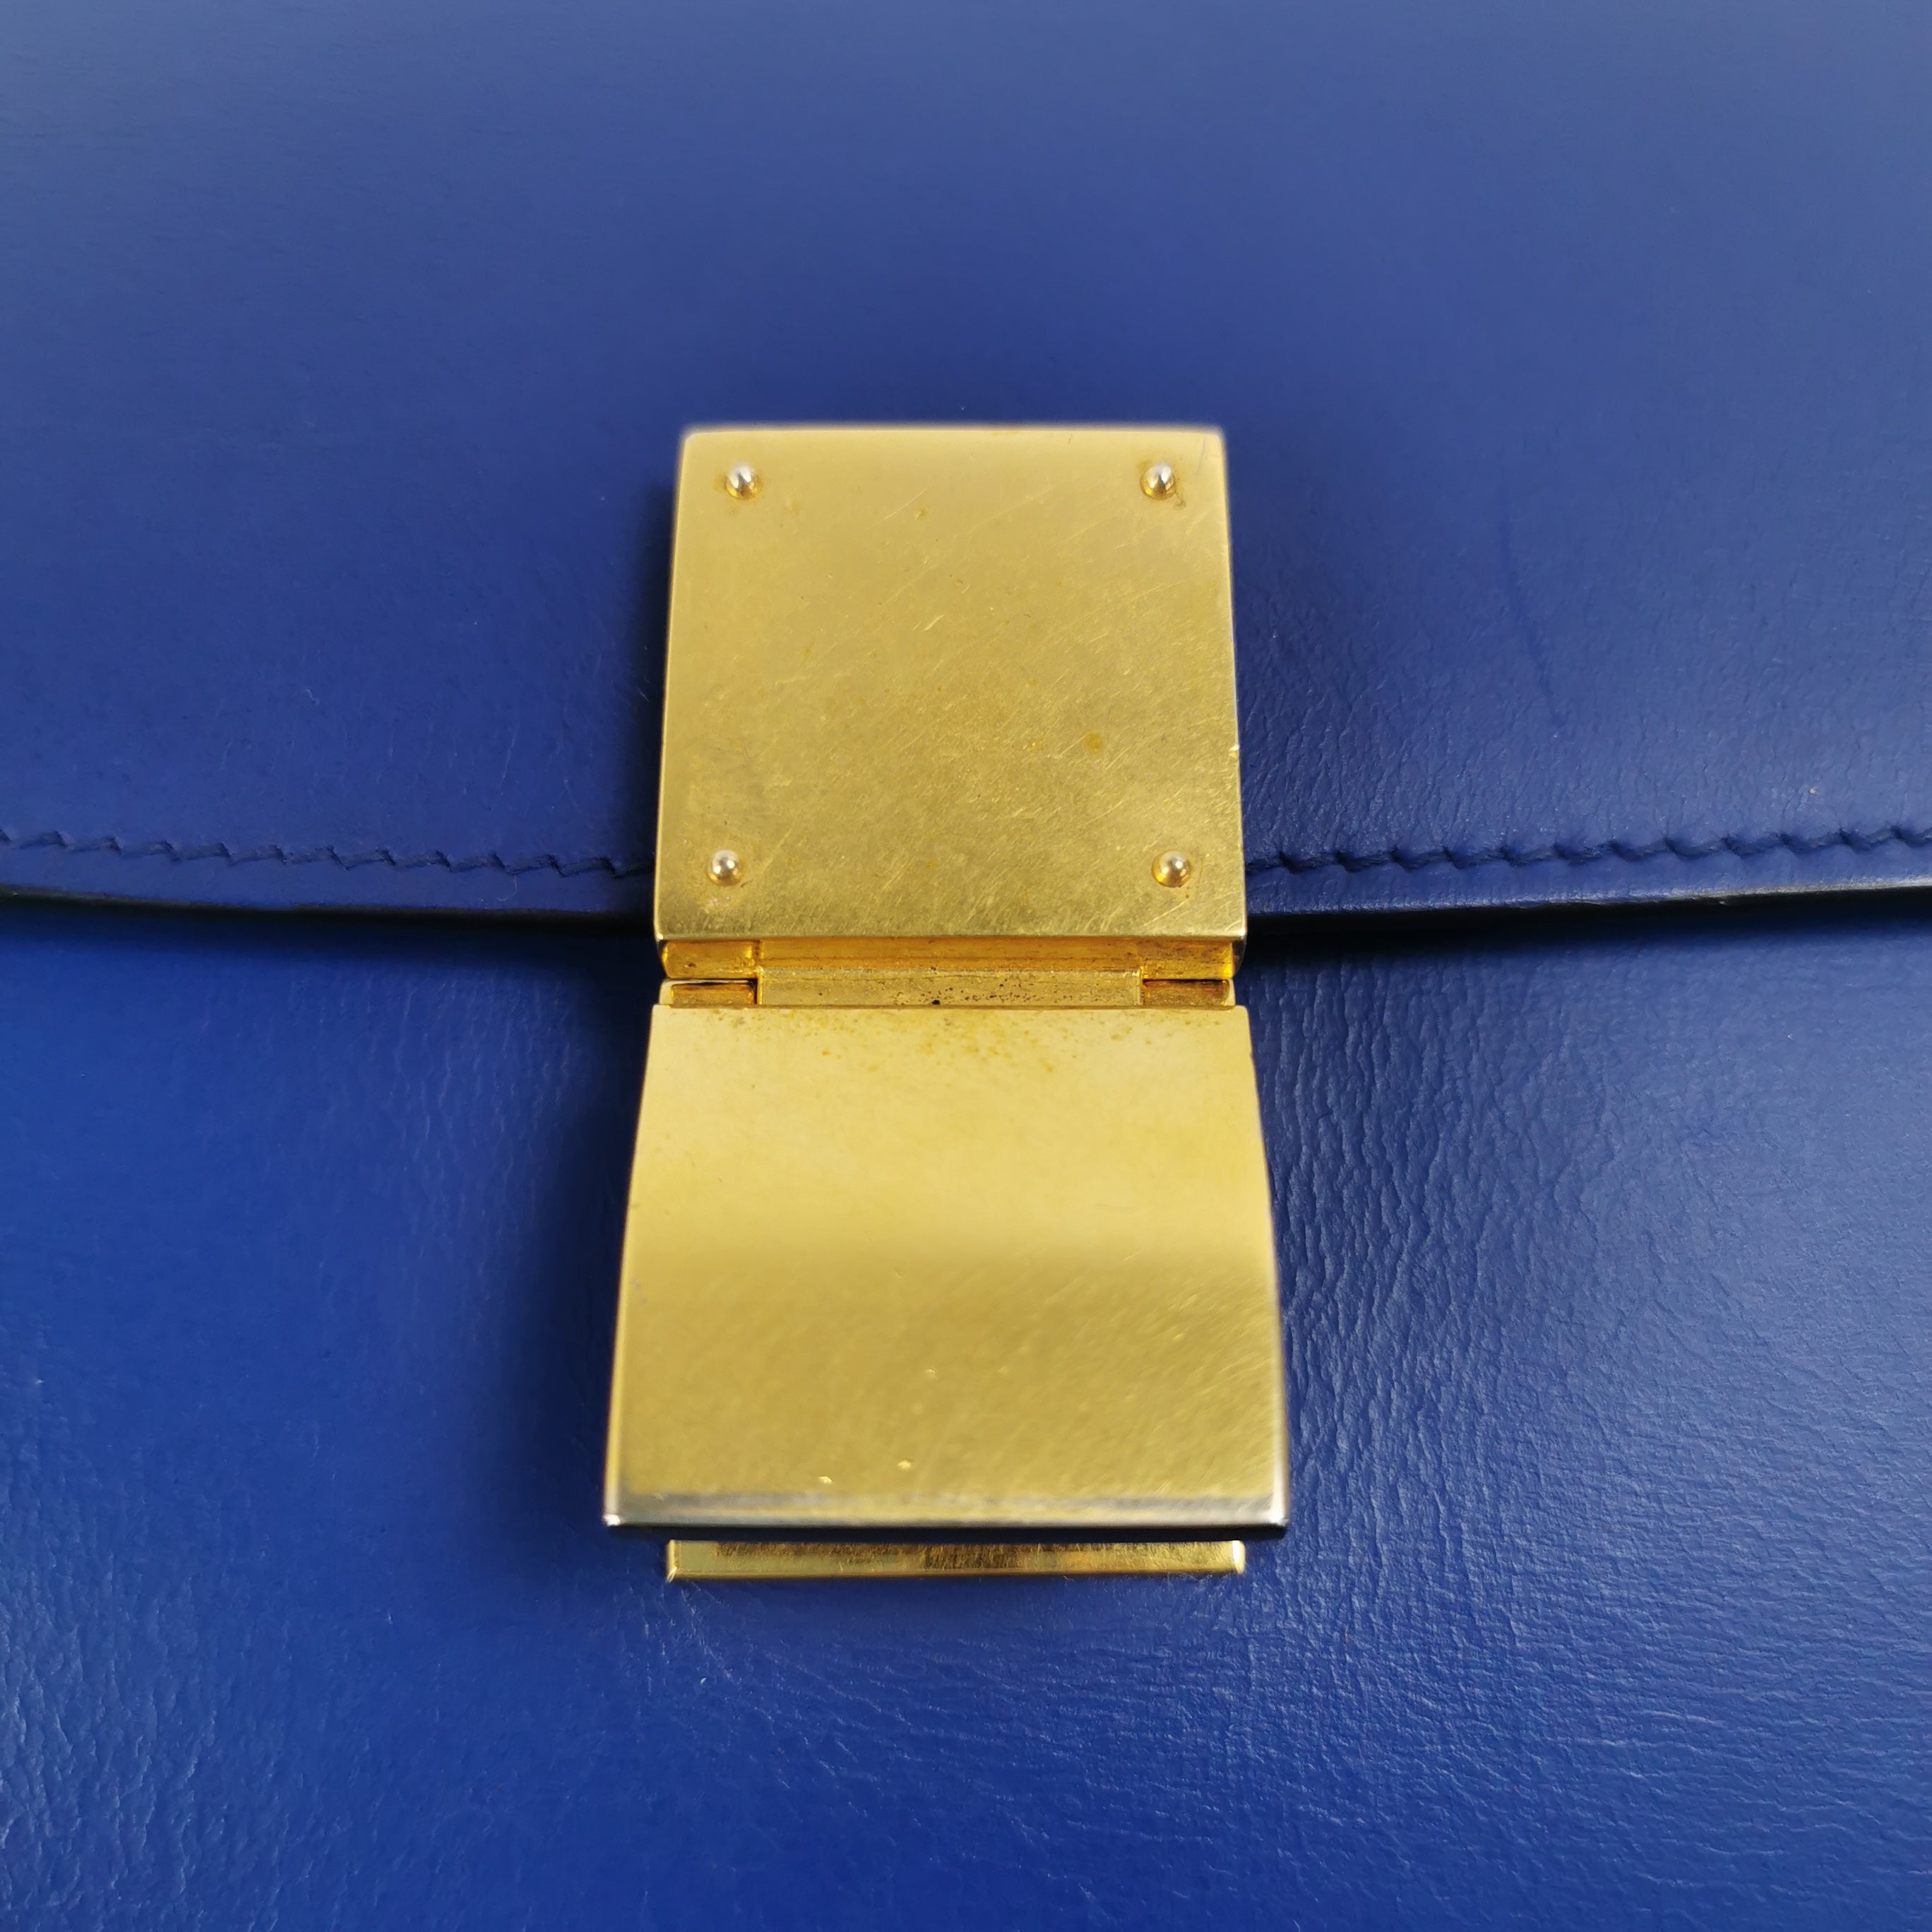 Celine Medium Classic Box Bag (Varied Colors)